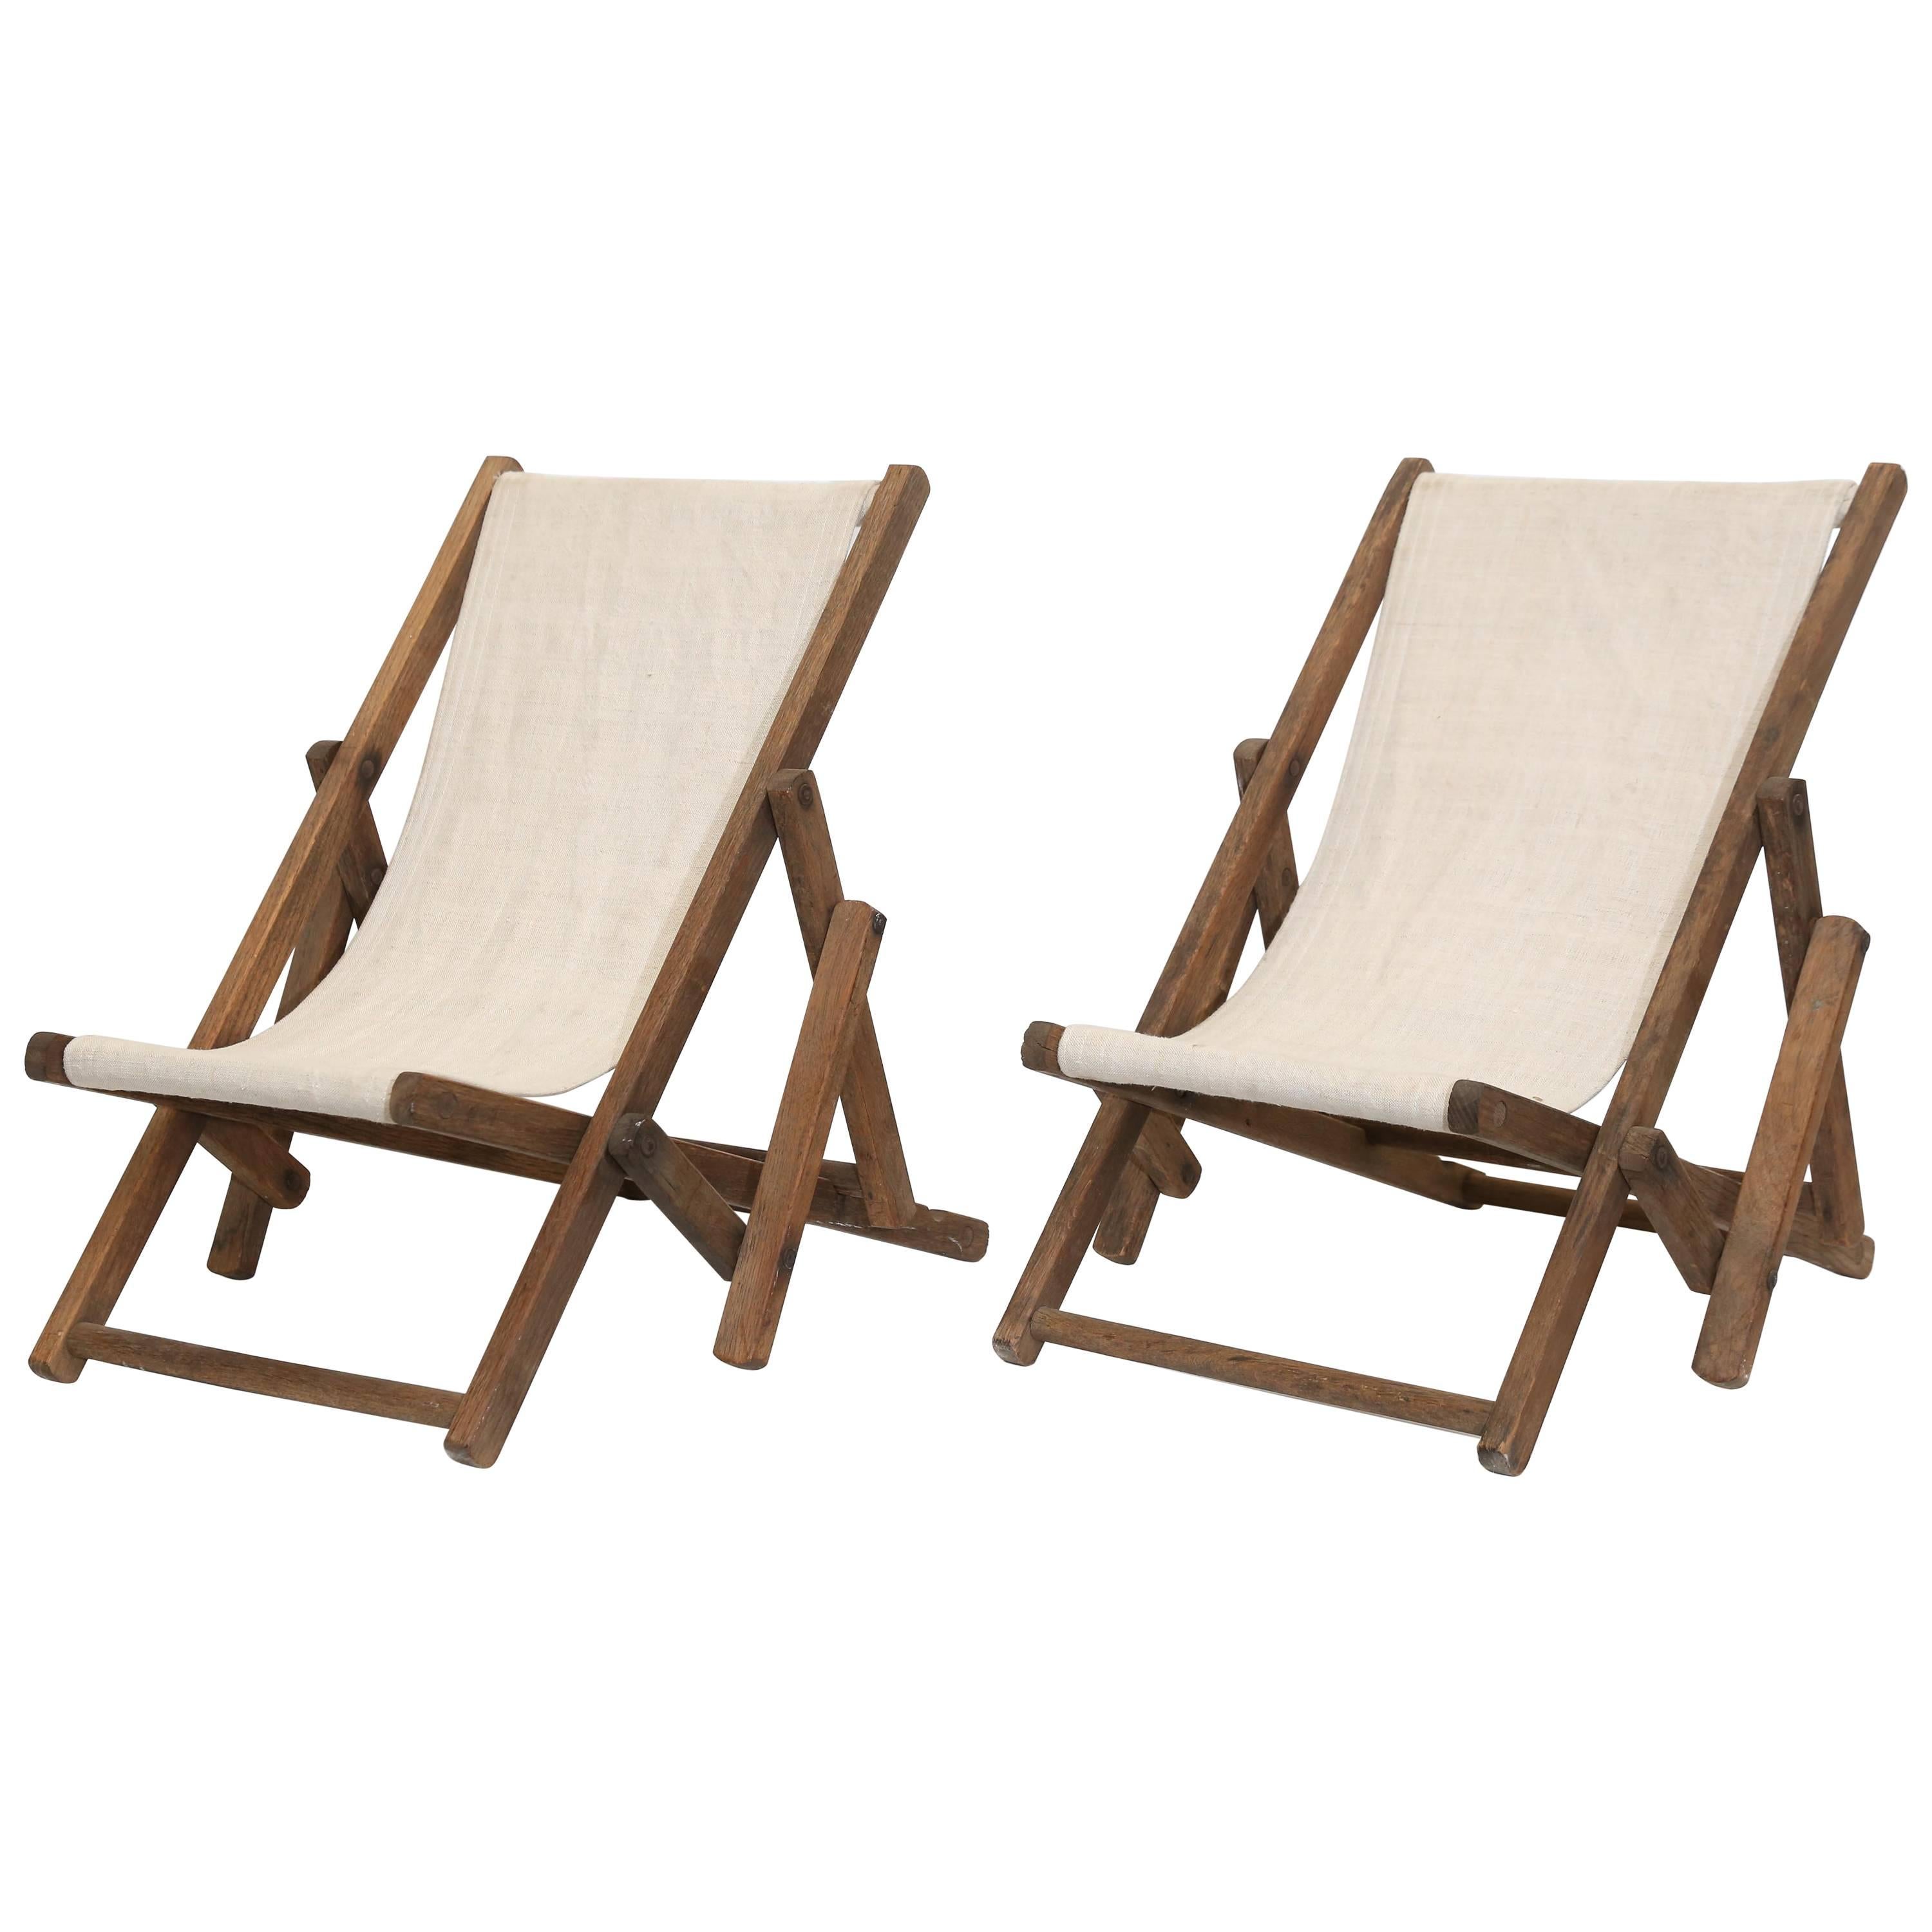 Pair of Children's Beach Chairs in European Linen